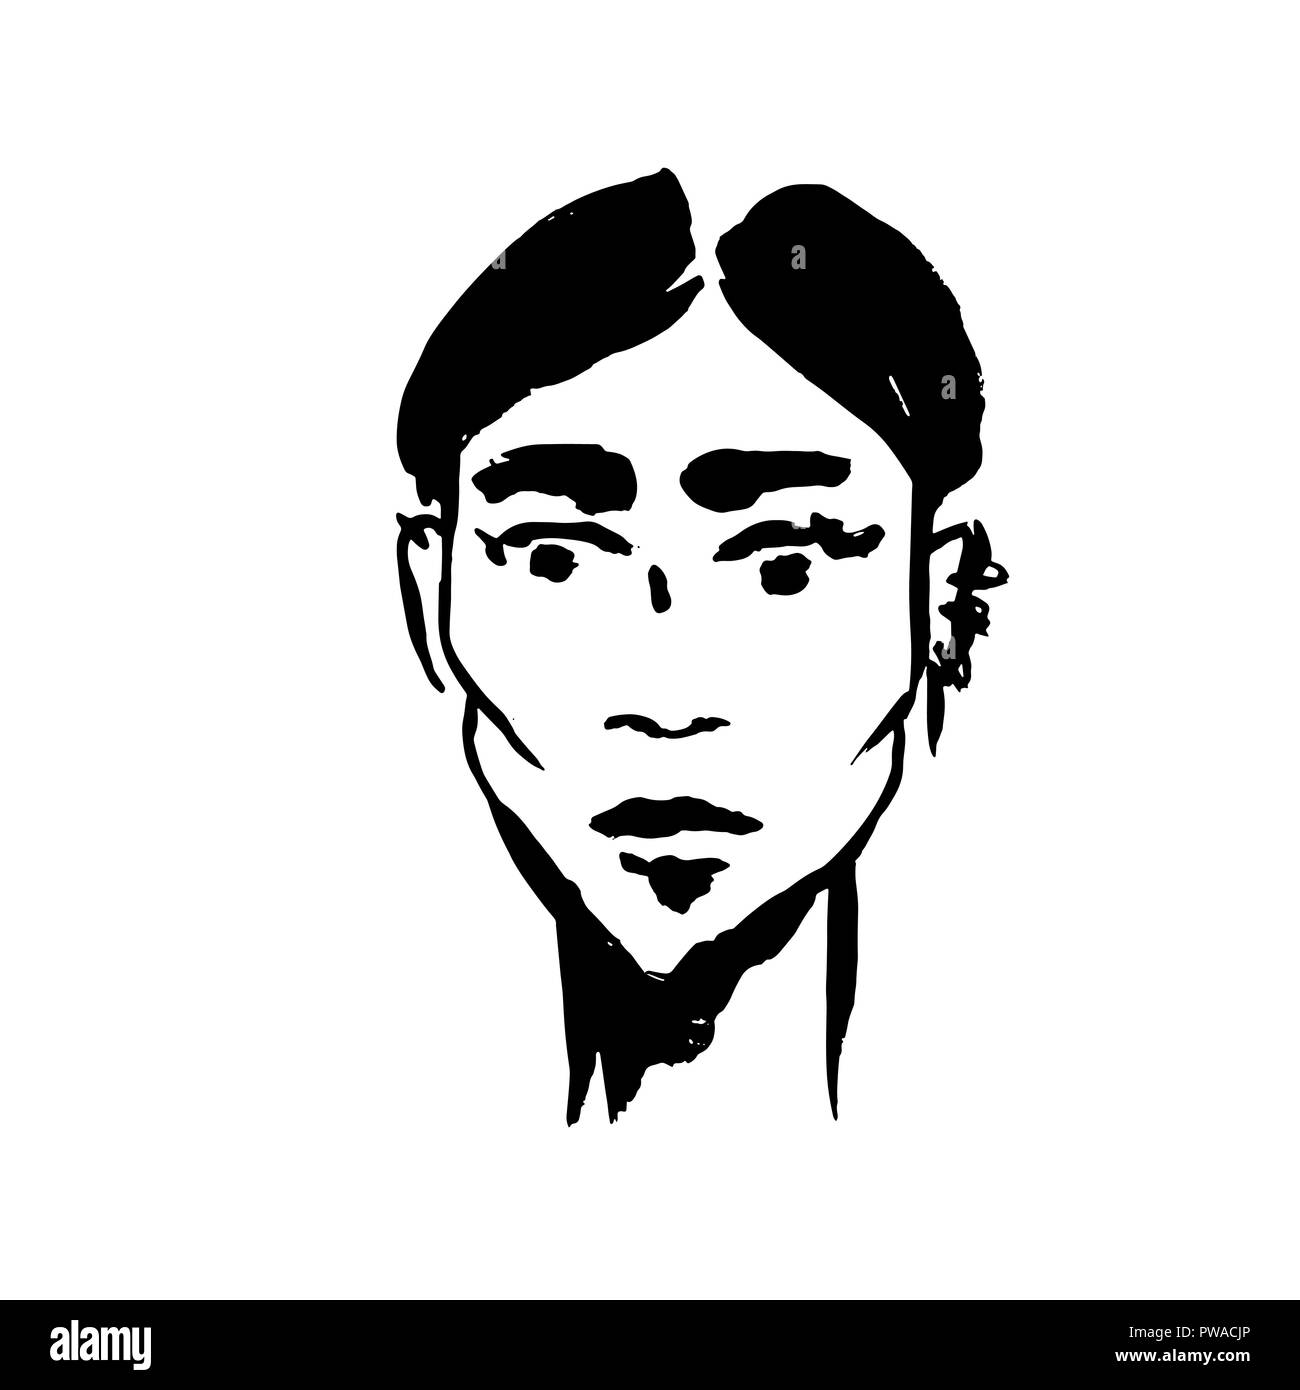 Brush grunge style simple portrait. Ink handmade drawing. Modern vector illustration. Stock Vector